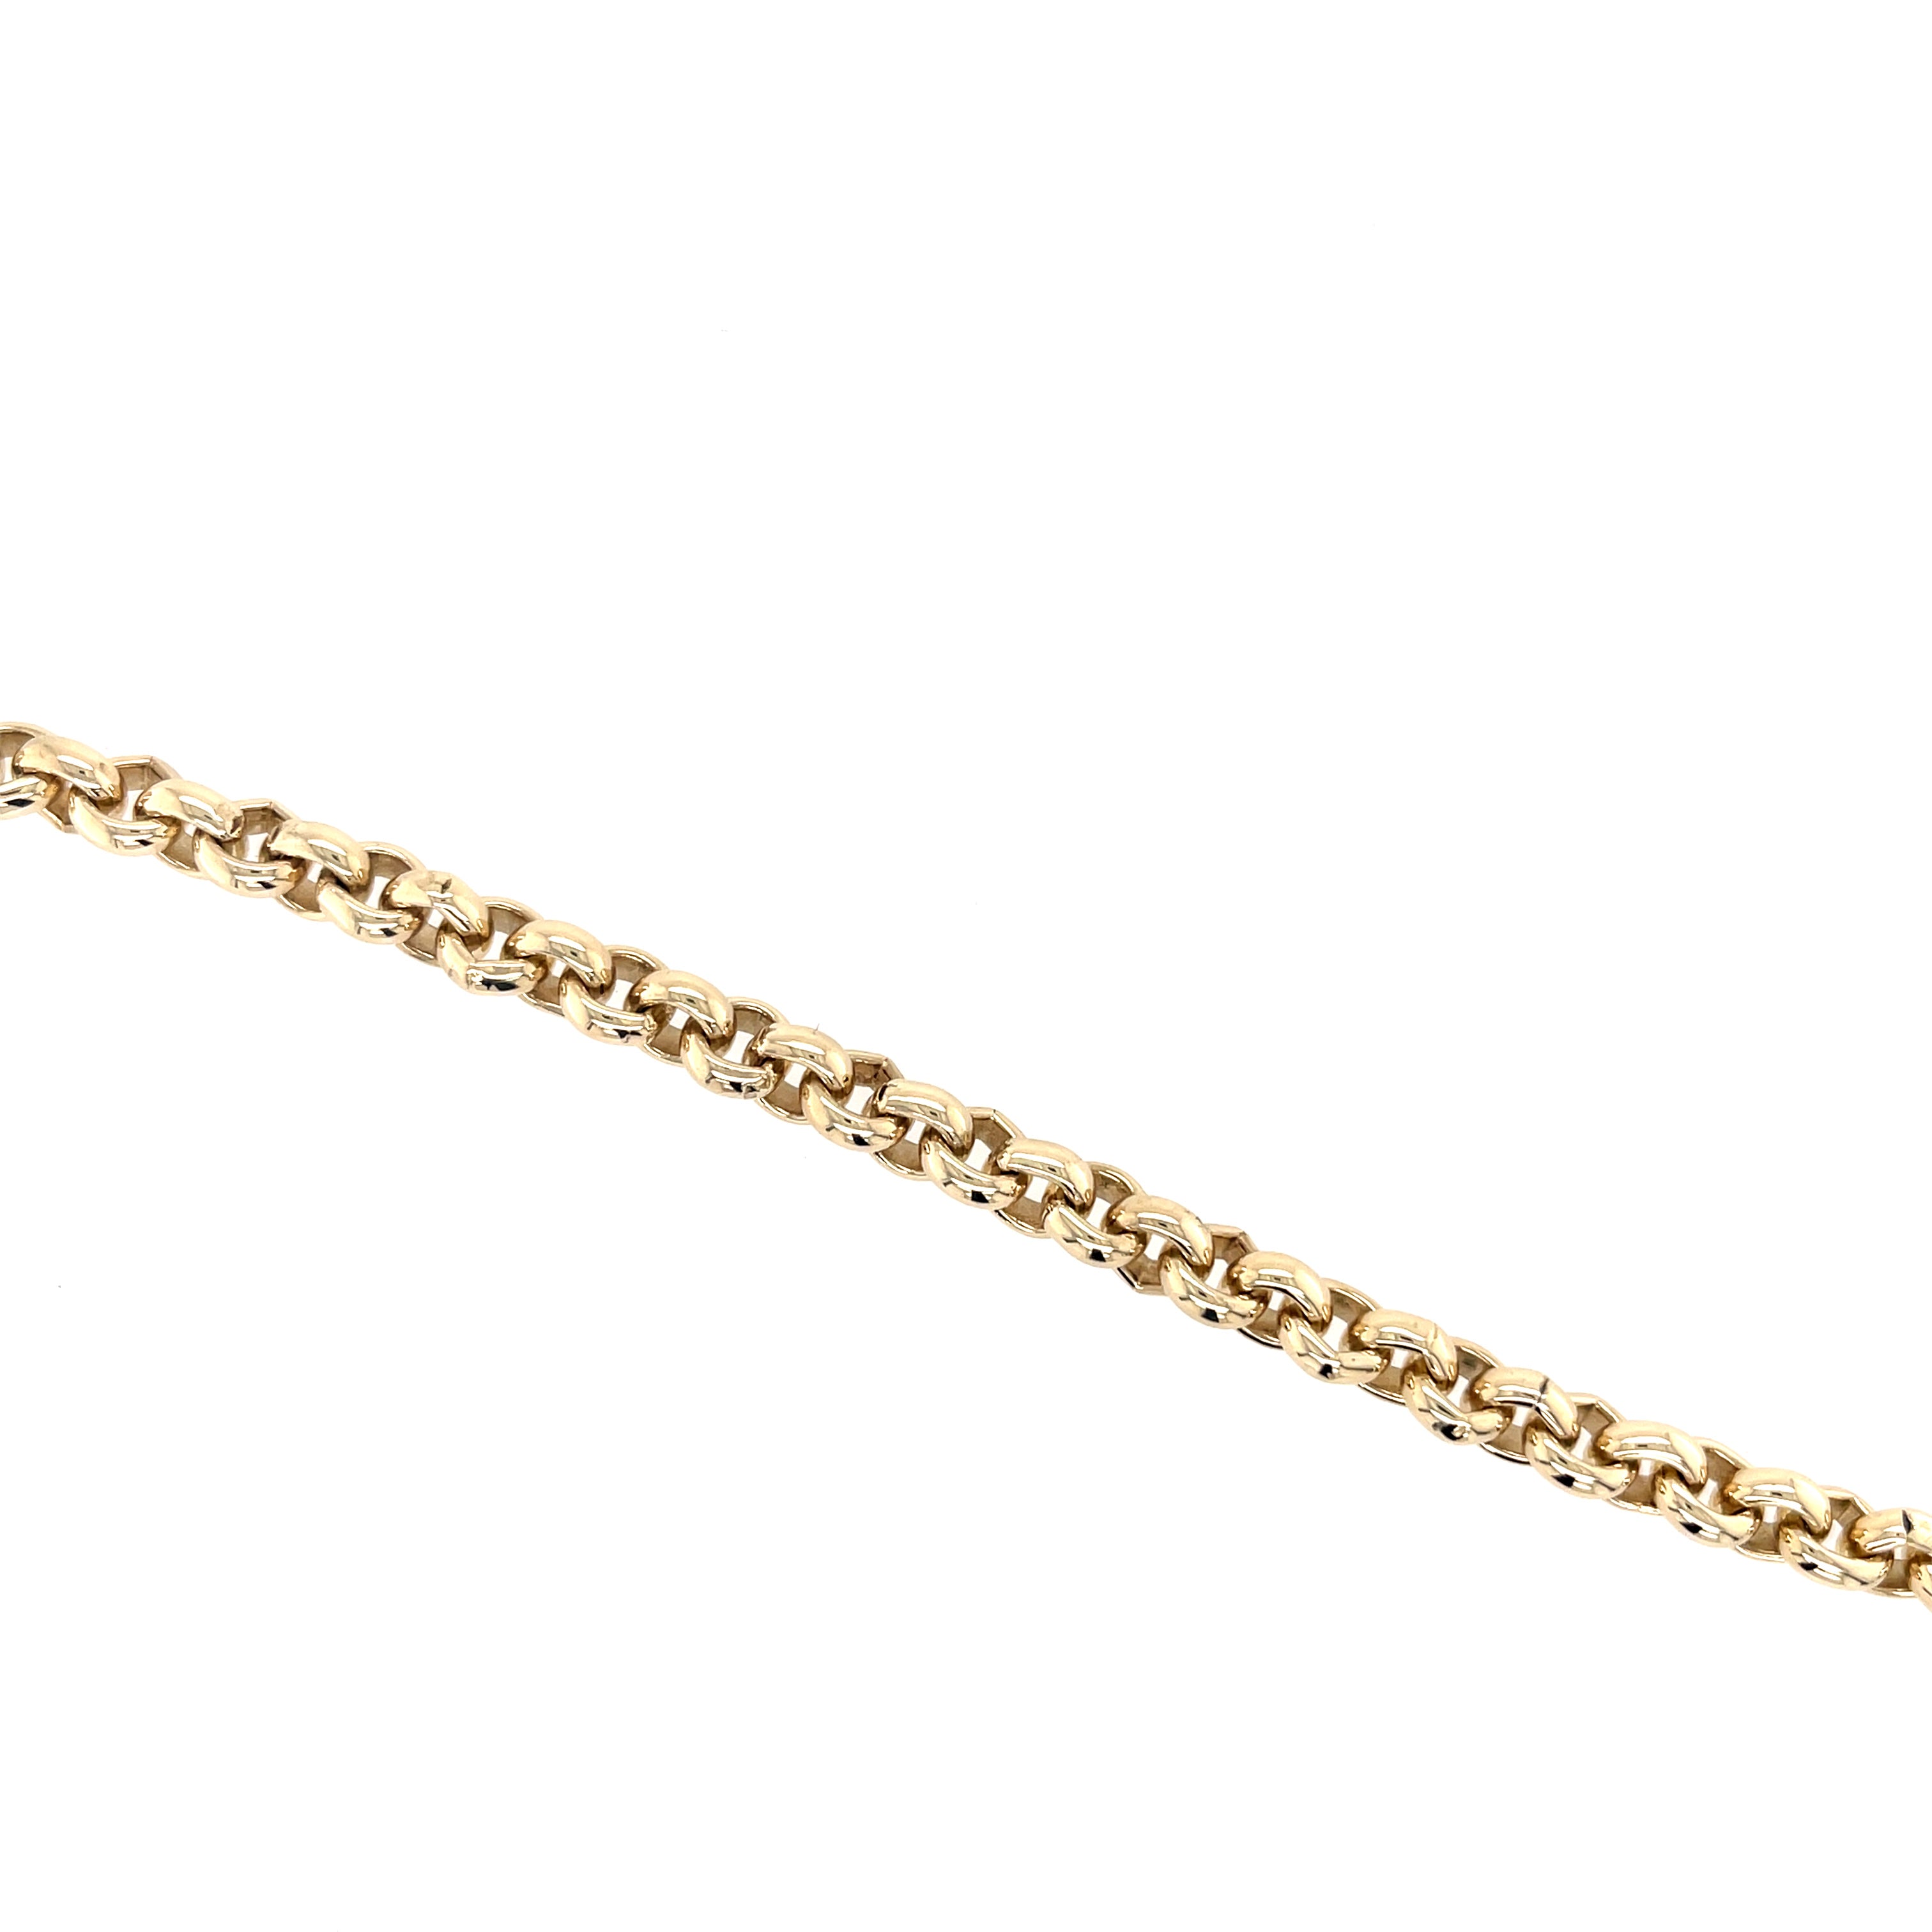 9ct Yellow Gold 8 Inch Belcher Link Bracelet - 28.35g